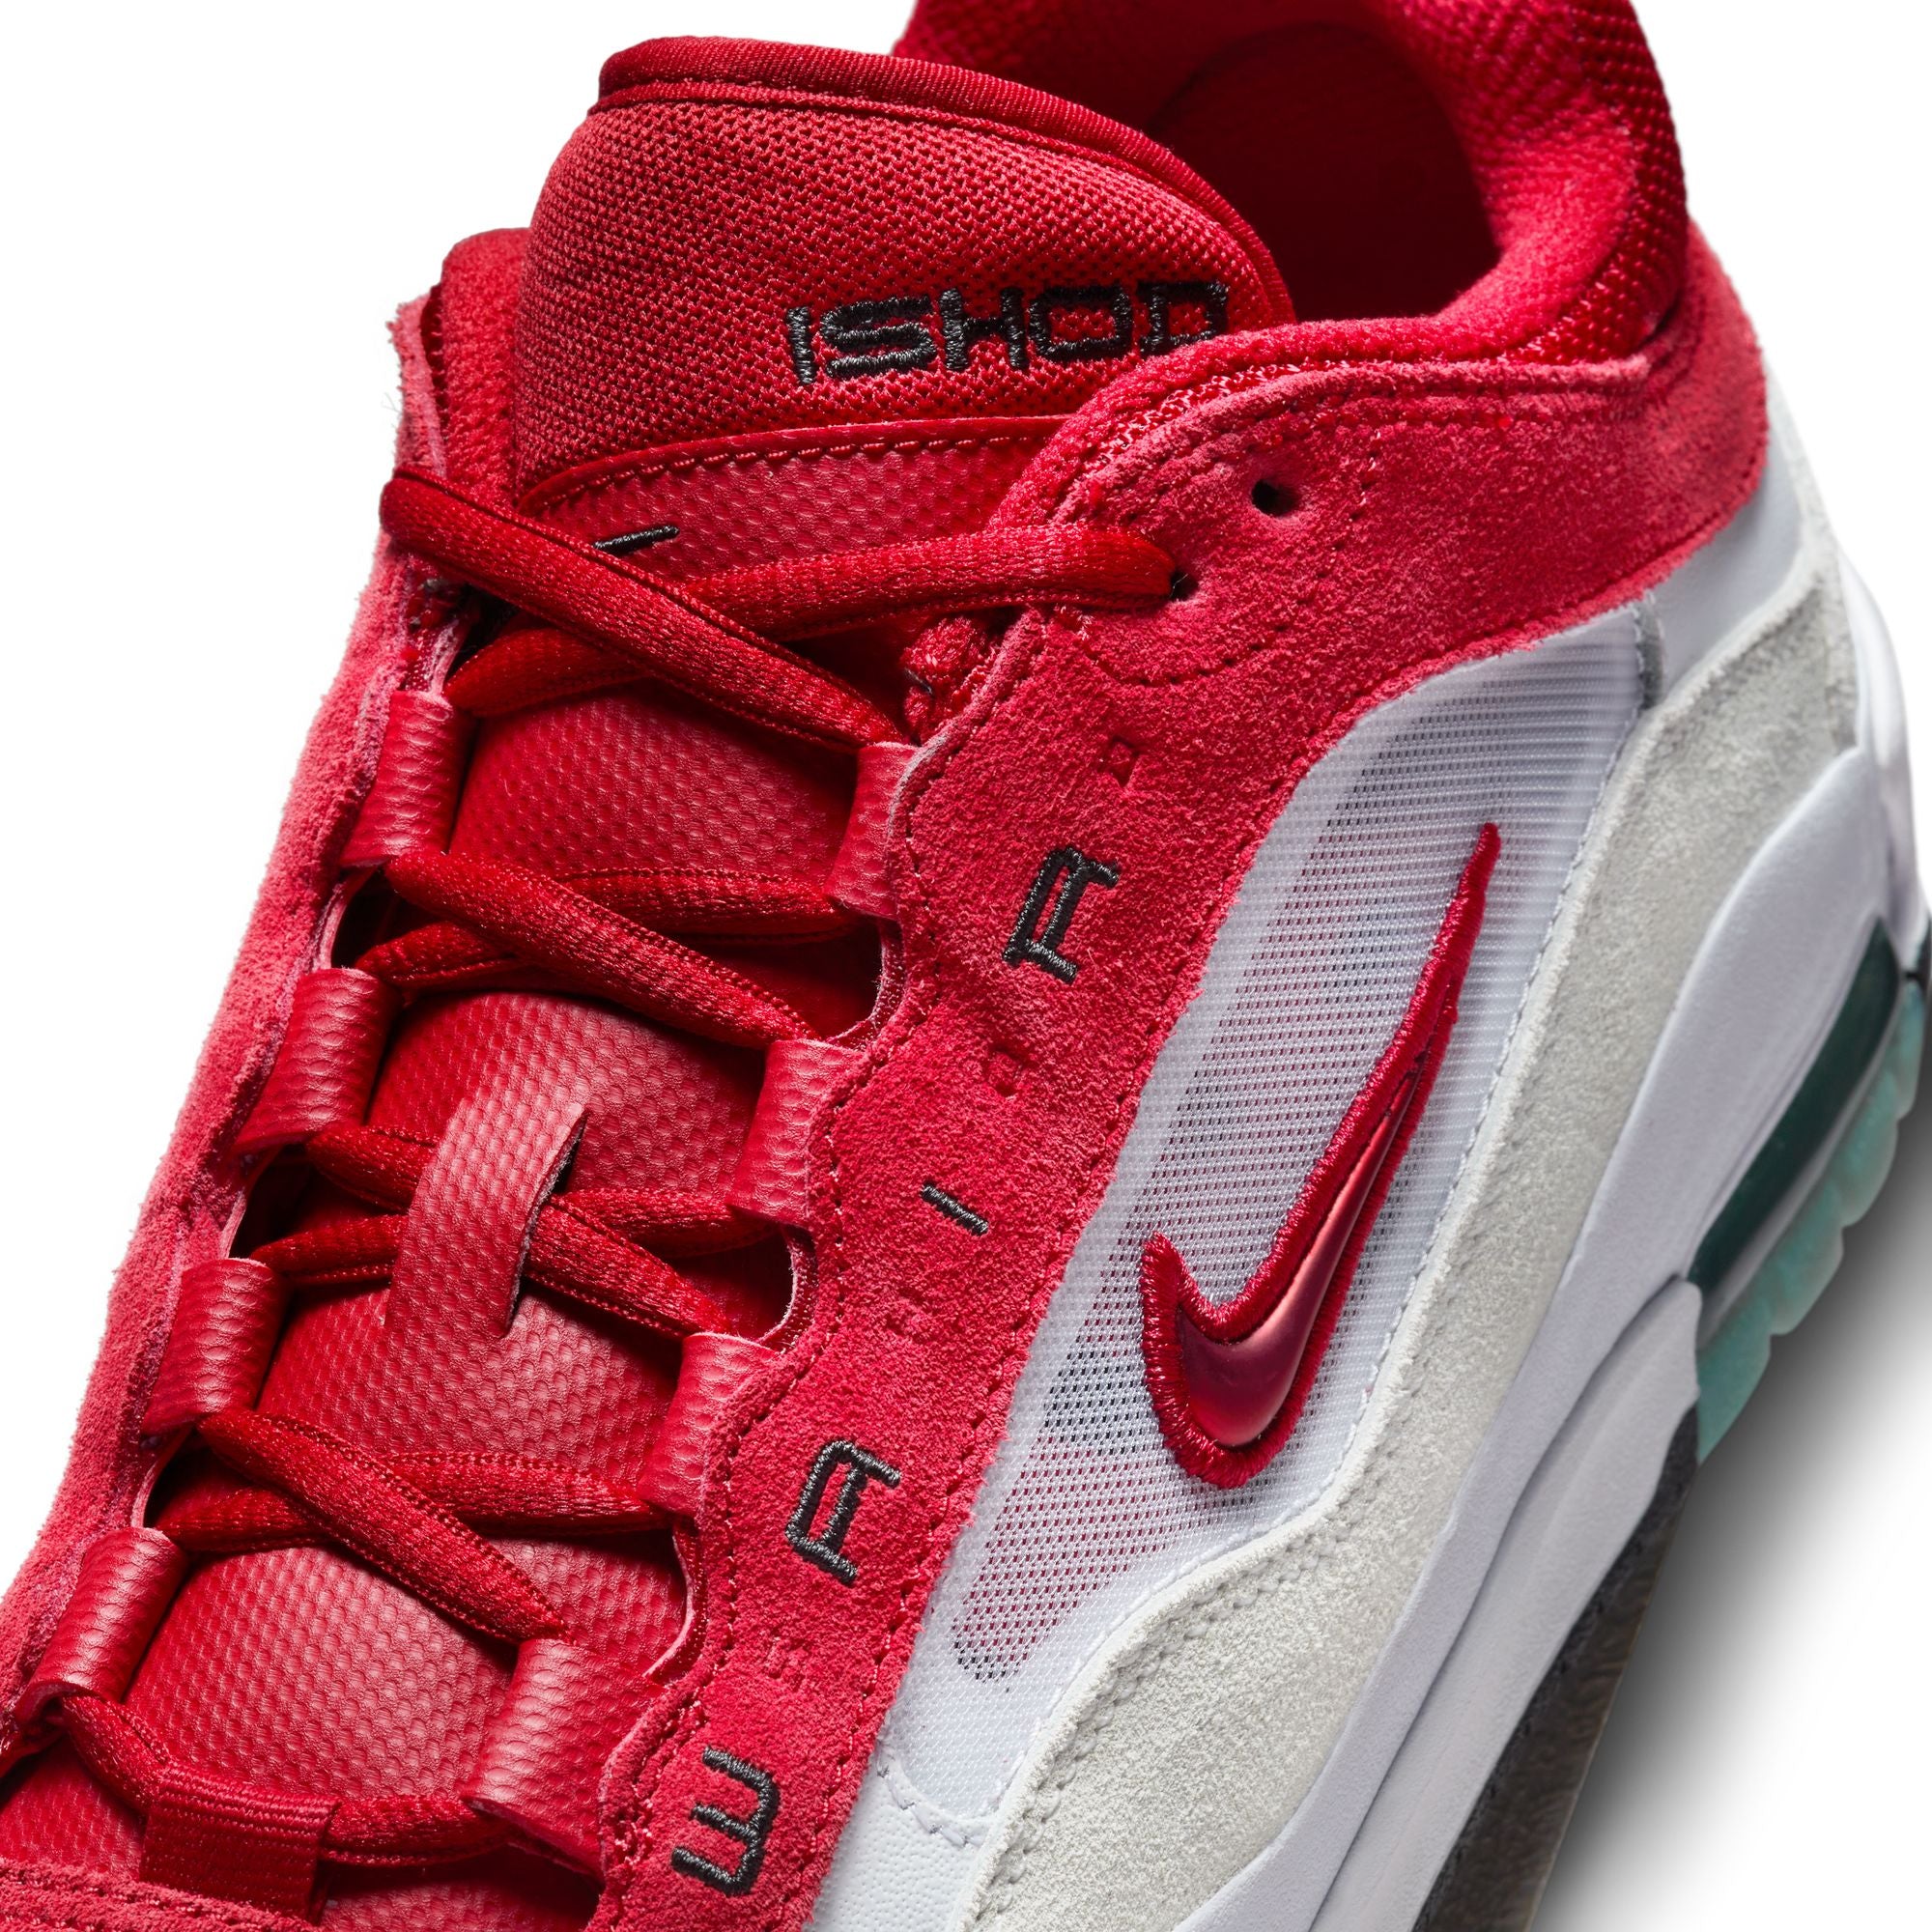 Nike Air Max Ishod Shoe - White/Varsity Red-Summit White